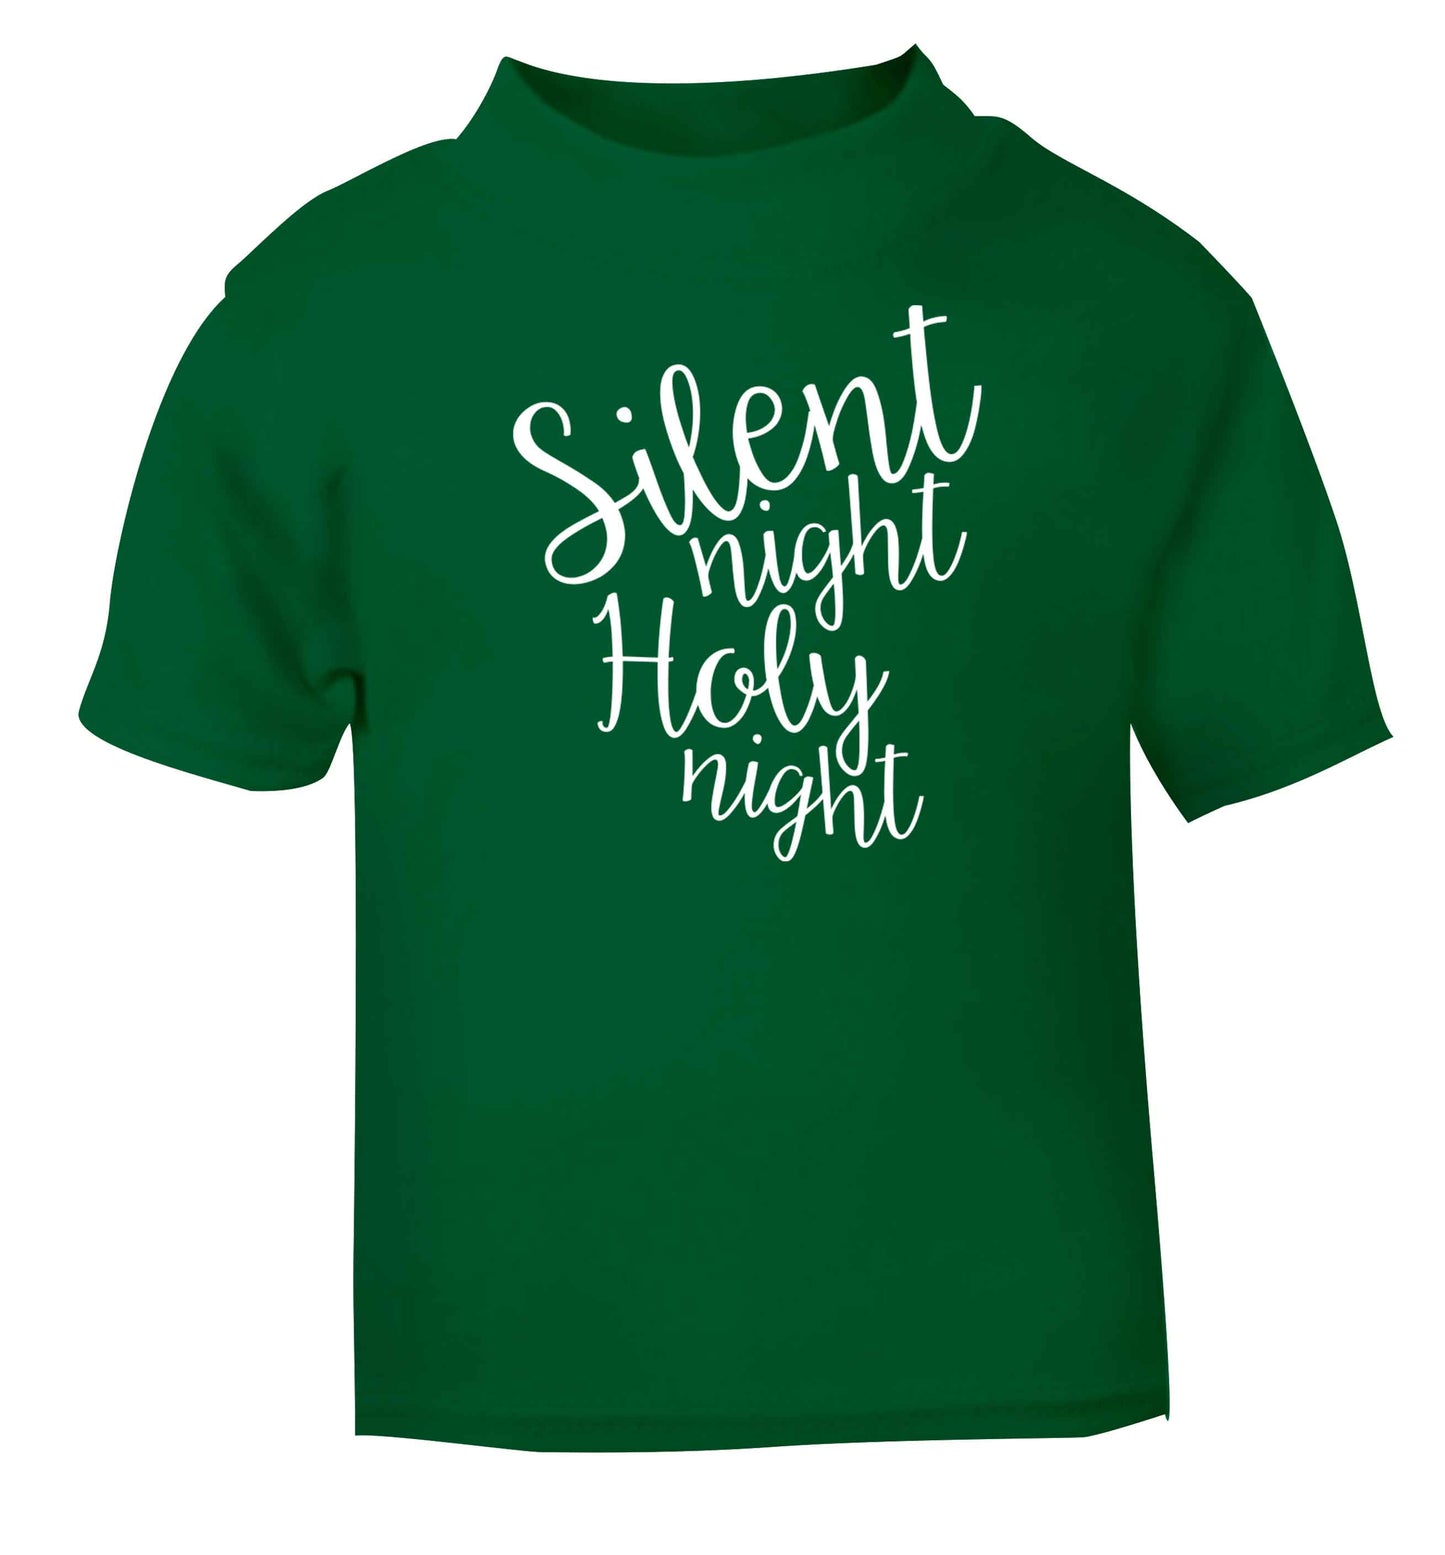 Silent night holy night green baby toddler Tshirt 2 Years